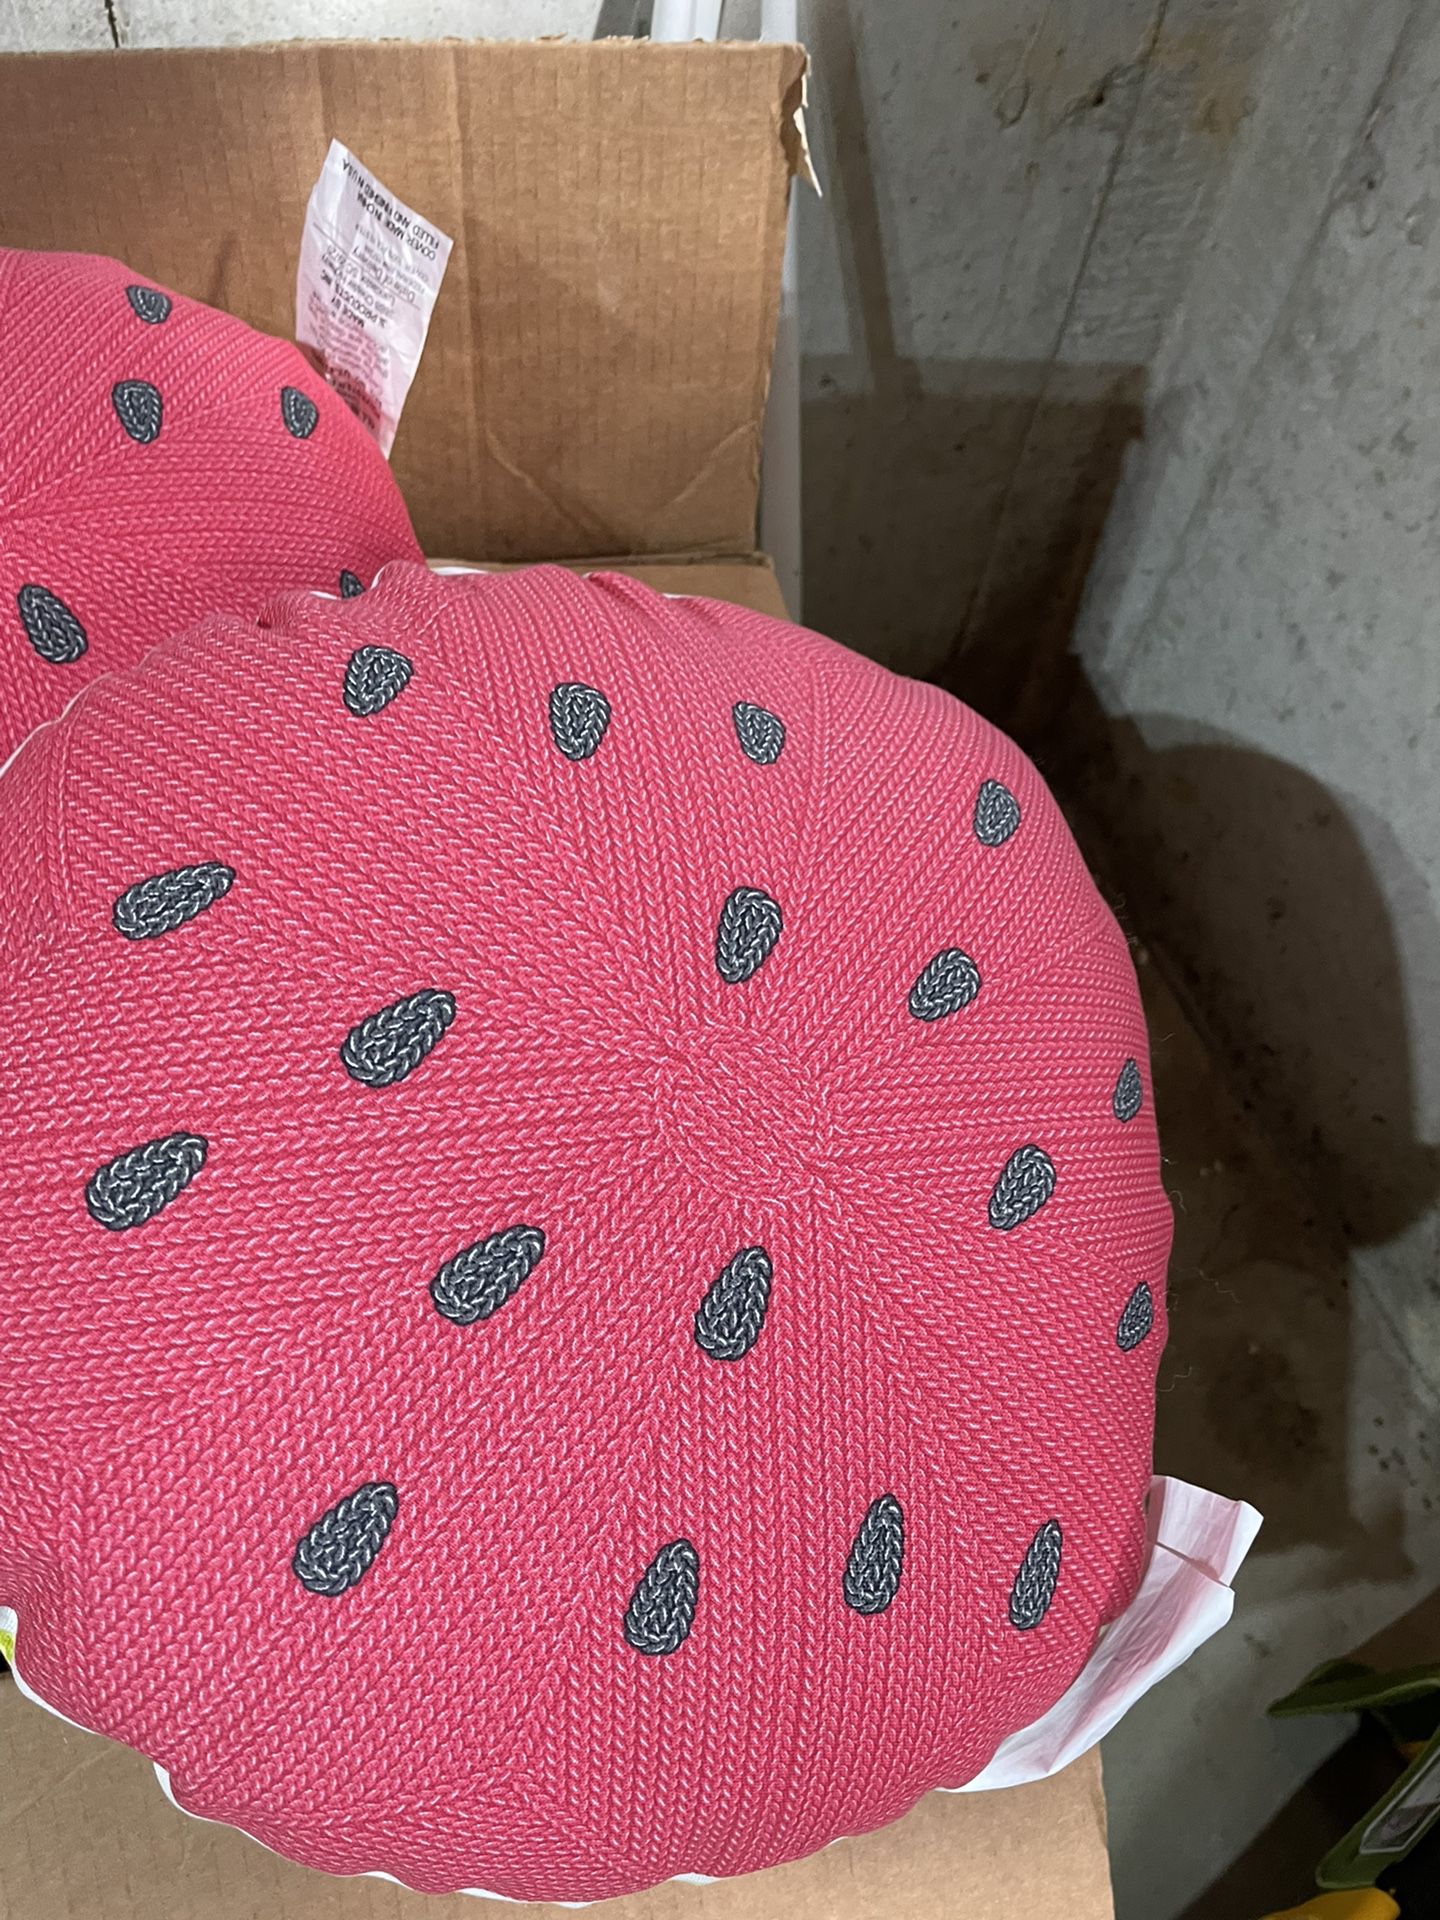 Watermelon Time Pillows 